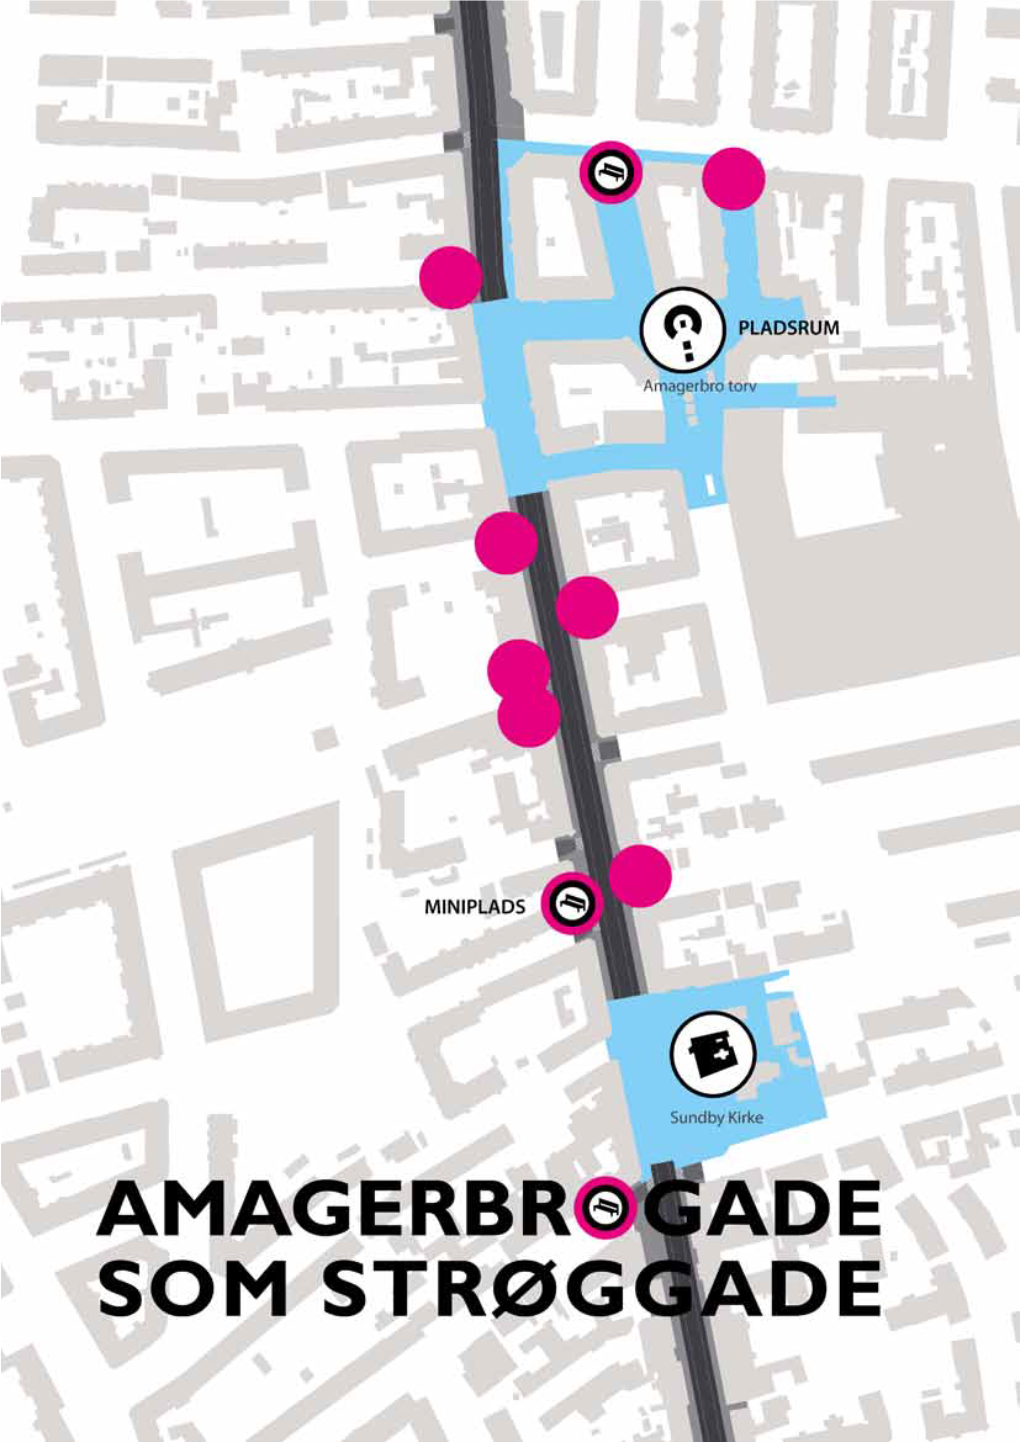 Amagerbrogade Som Strøggade Pixibog 4.7.2012